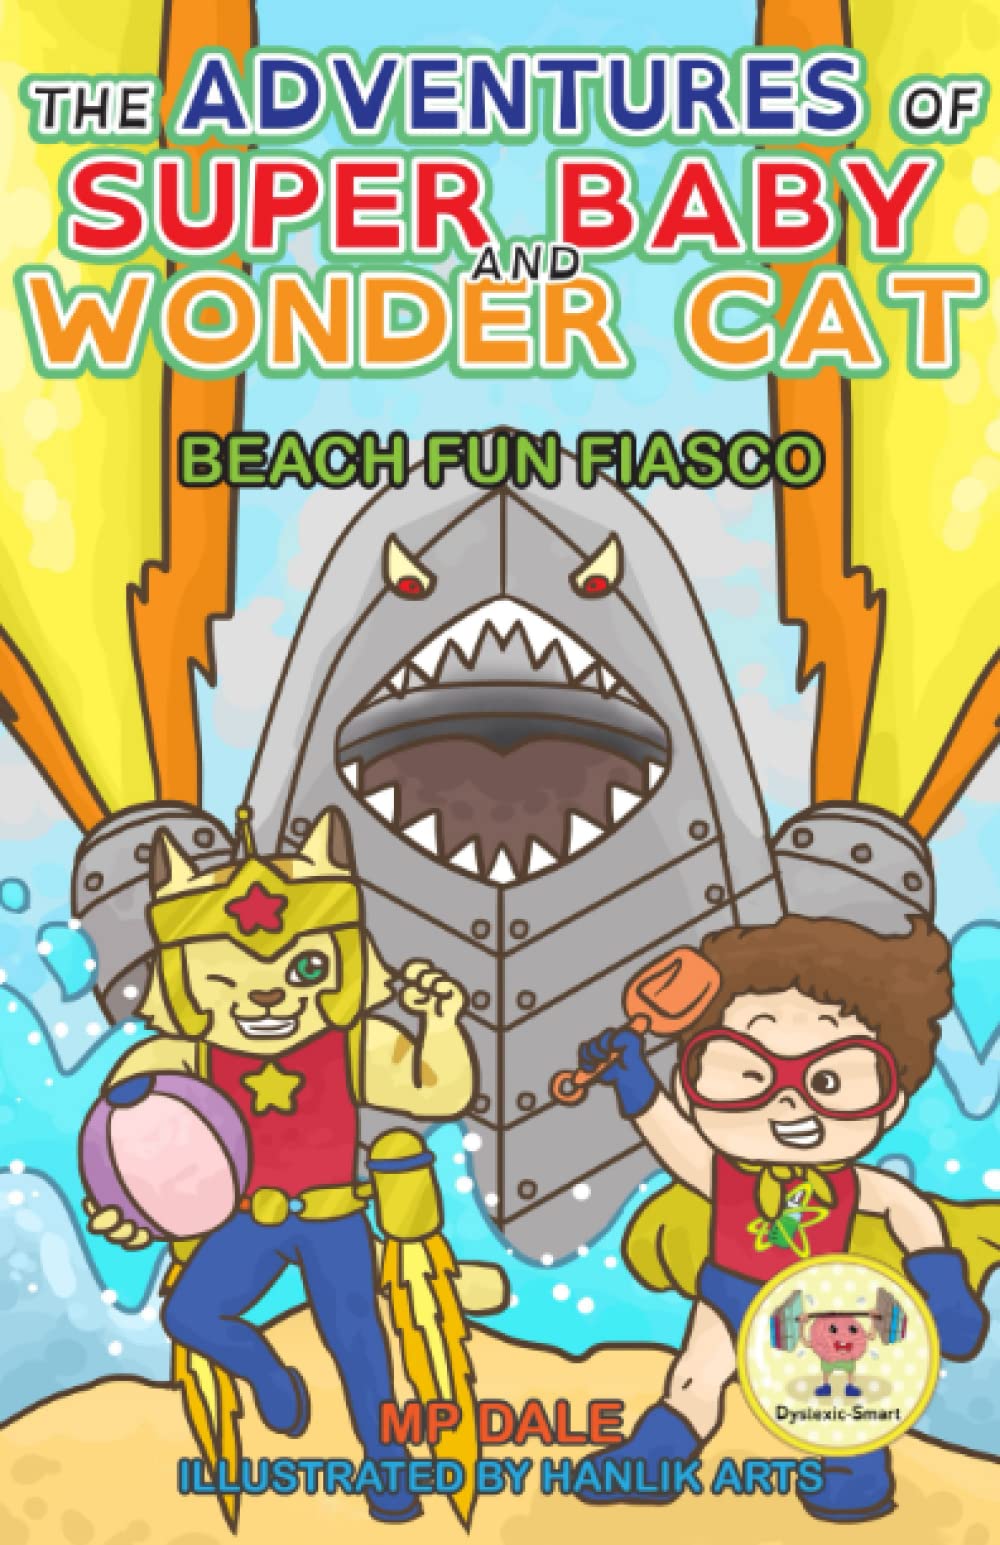 The Adventures of Super Baby: Beach Fun Fiasco